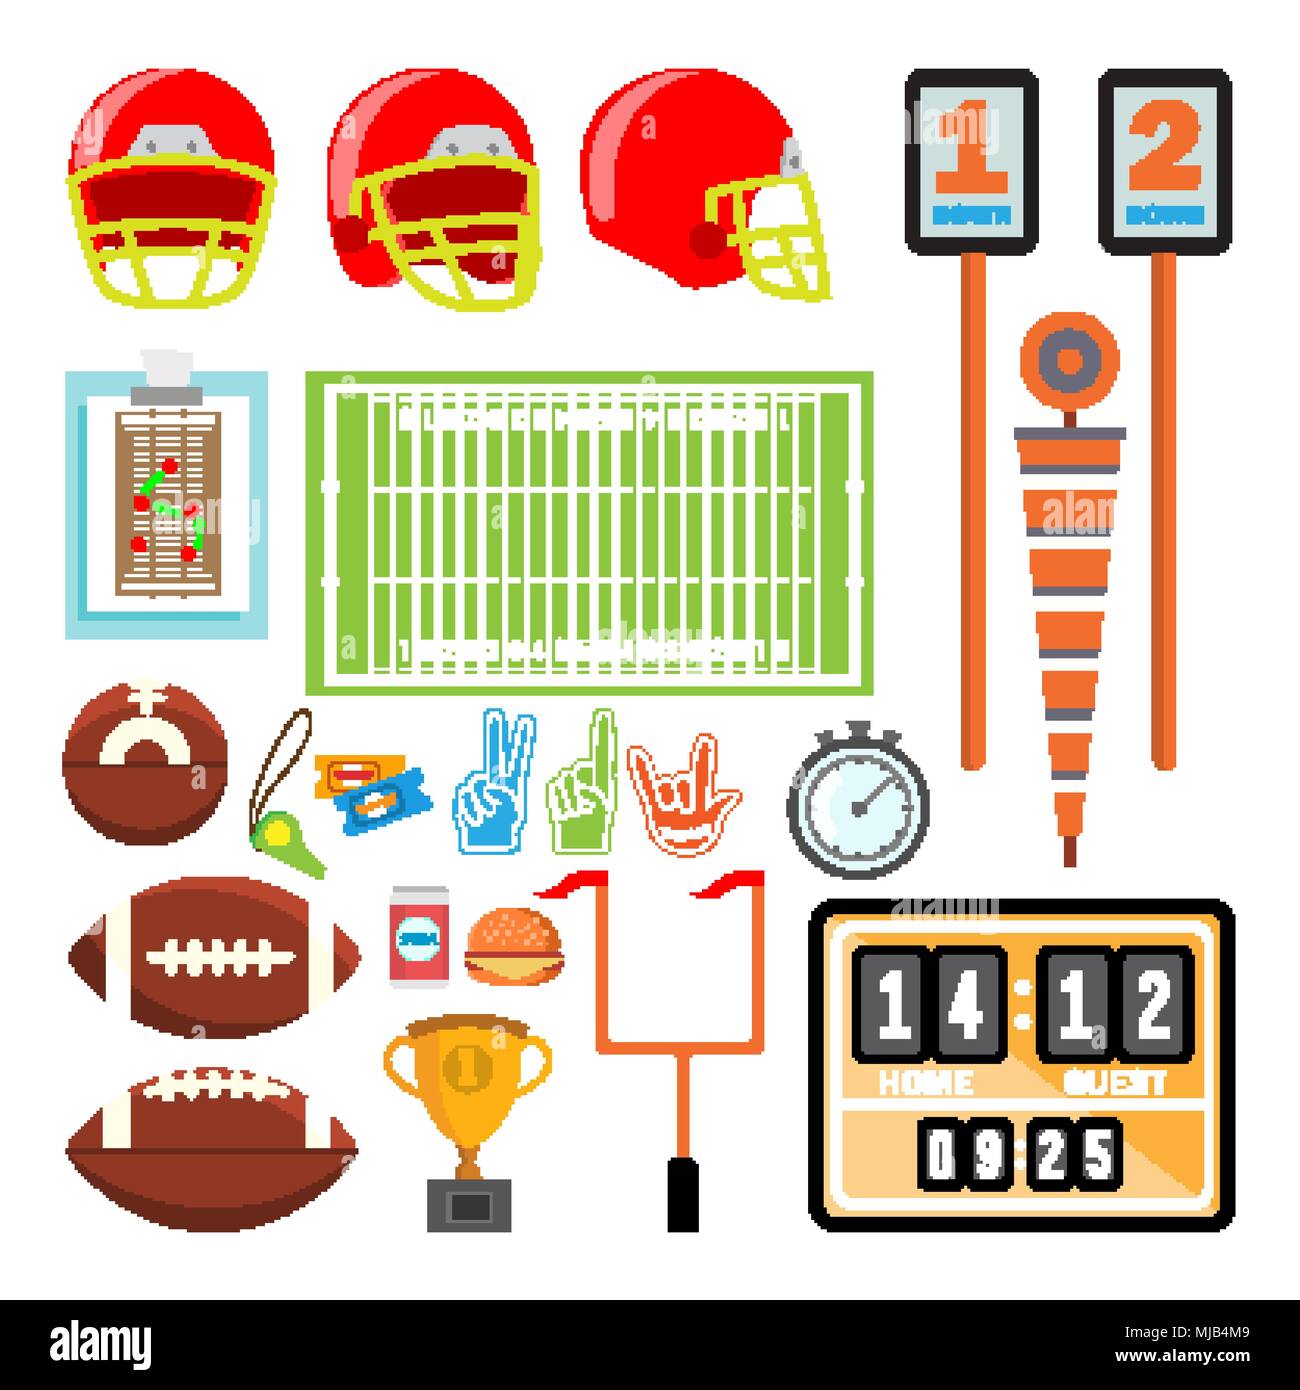 Iconos de fútbol Set Vector. Accesorios de fútbol. Bola, uniforme